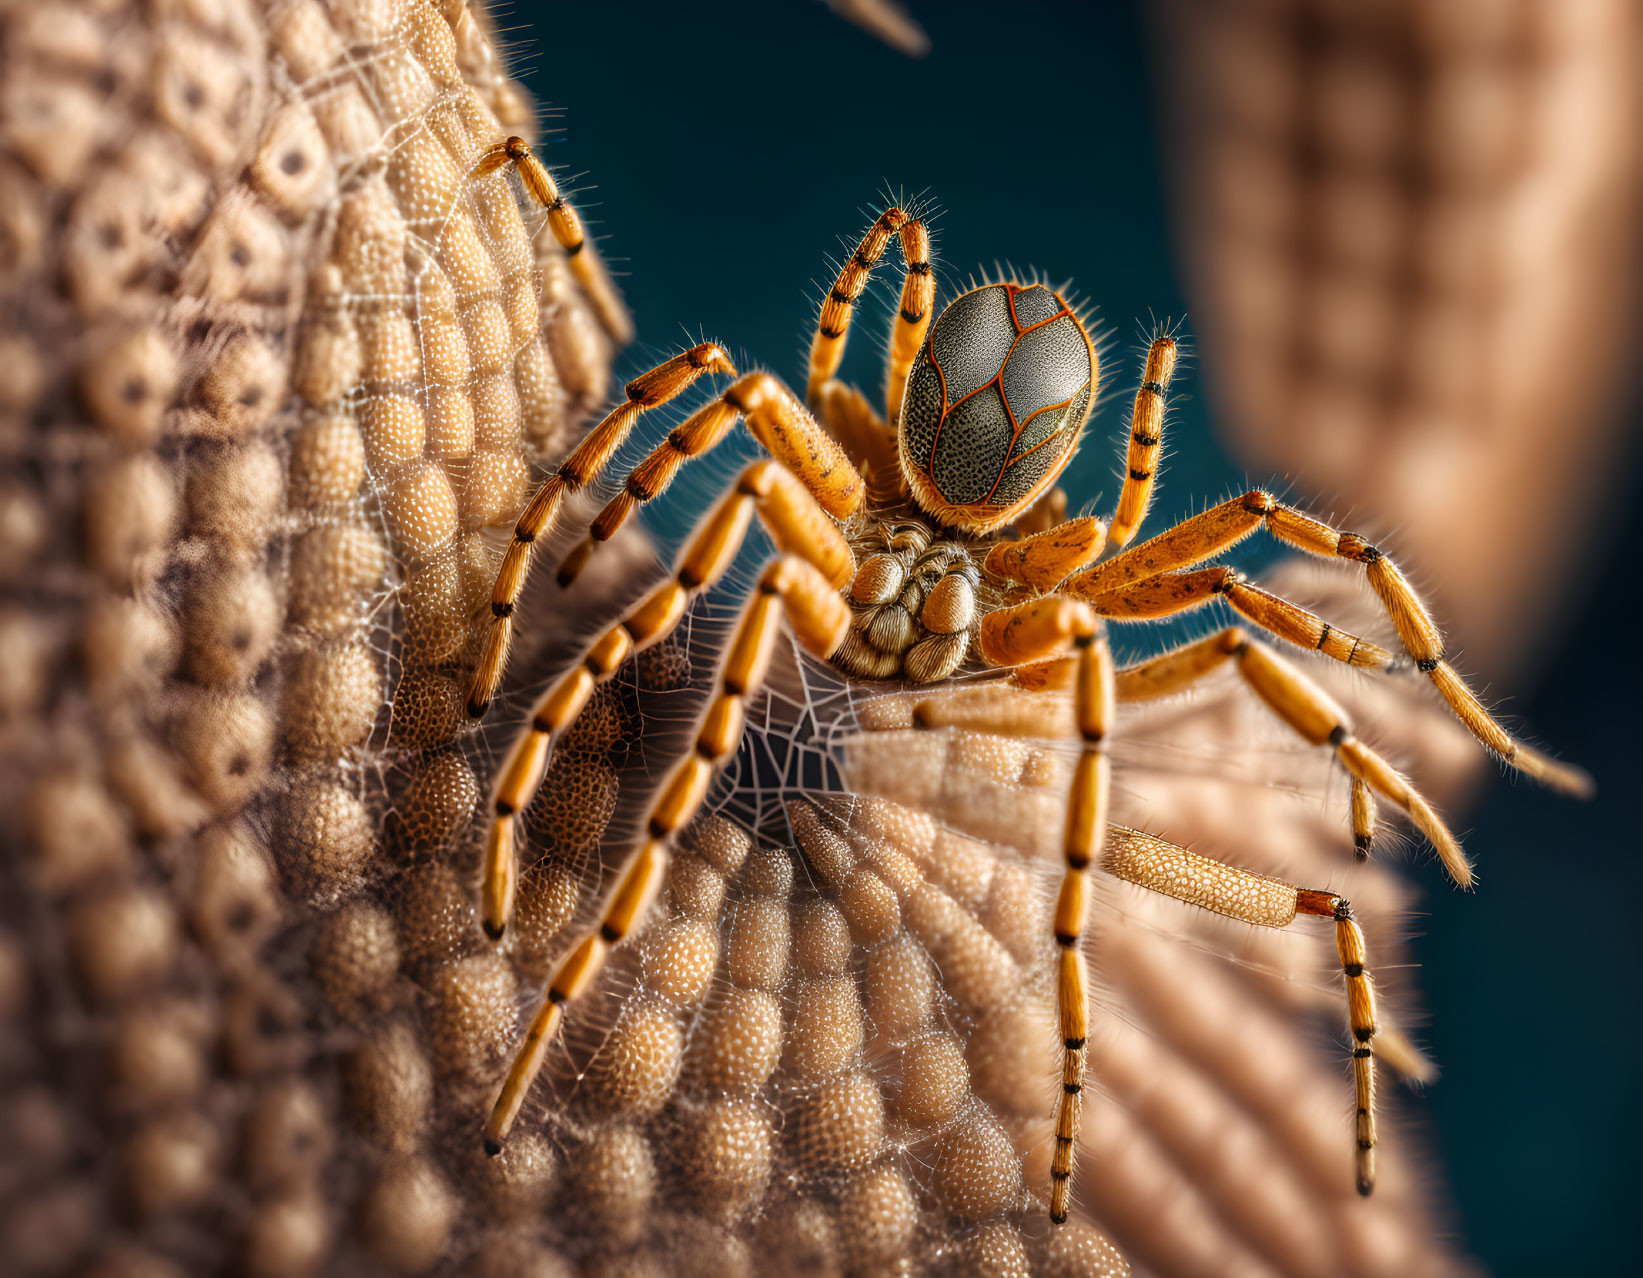 Orange Spider with Striped Legs on Textured Surface